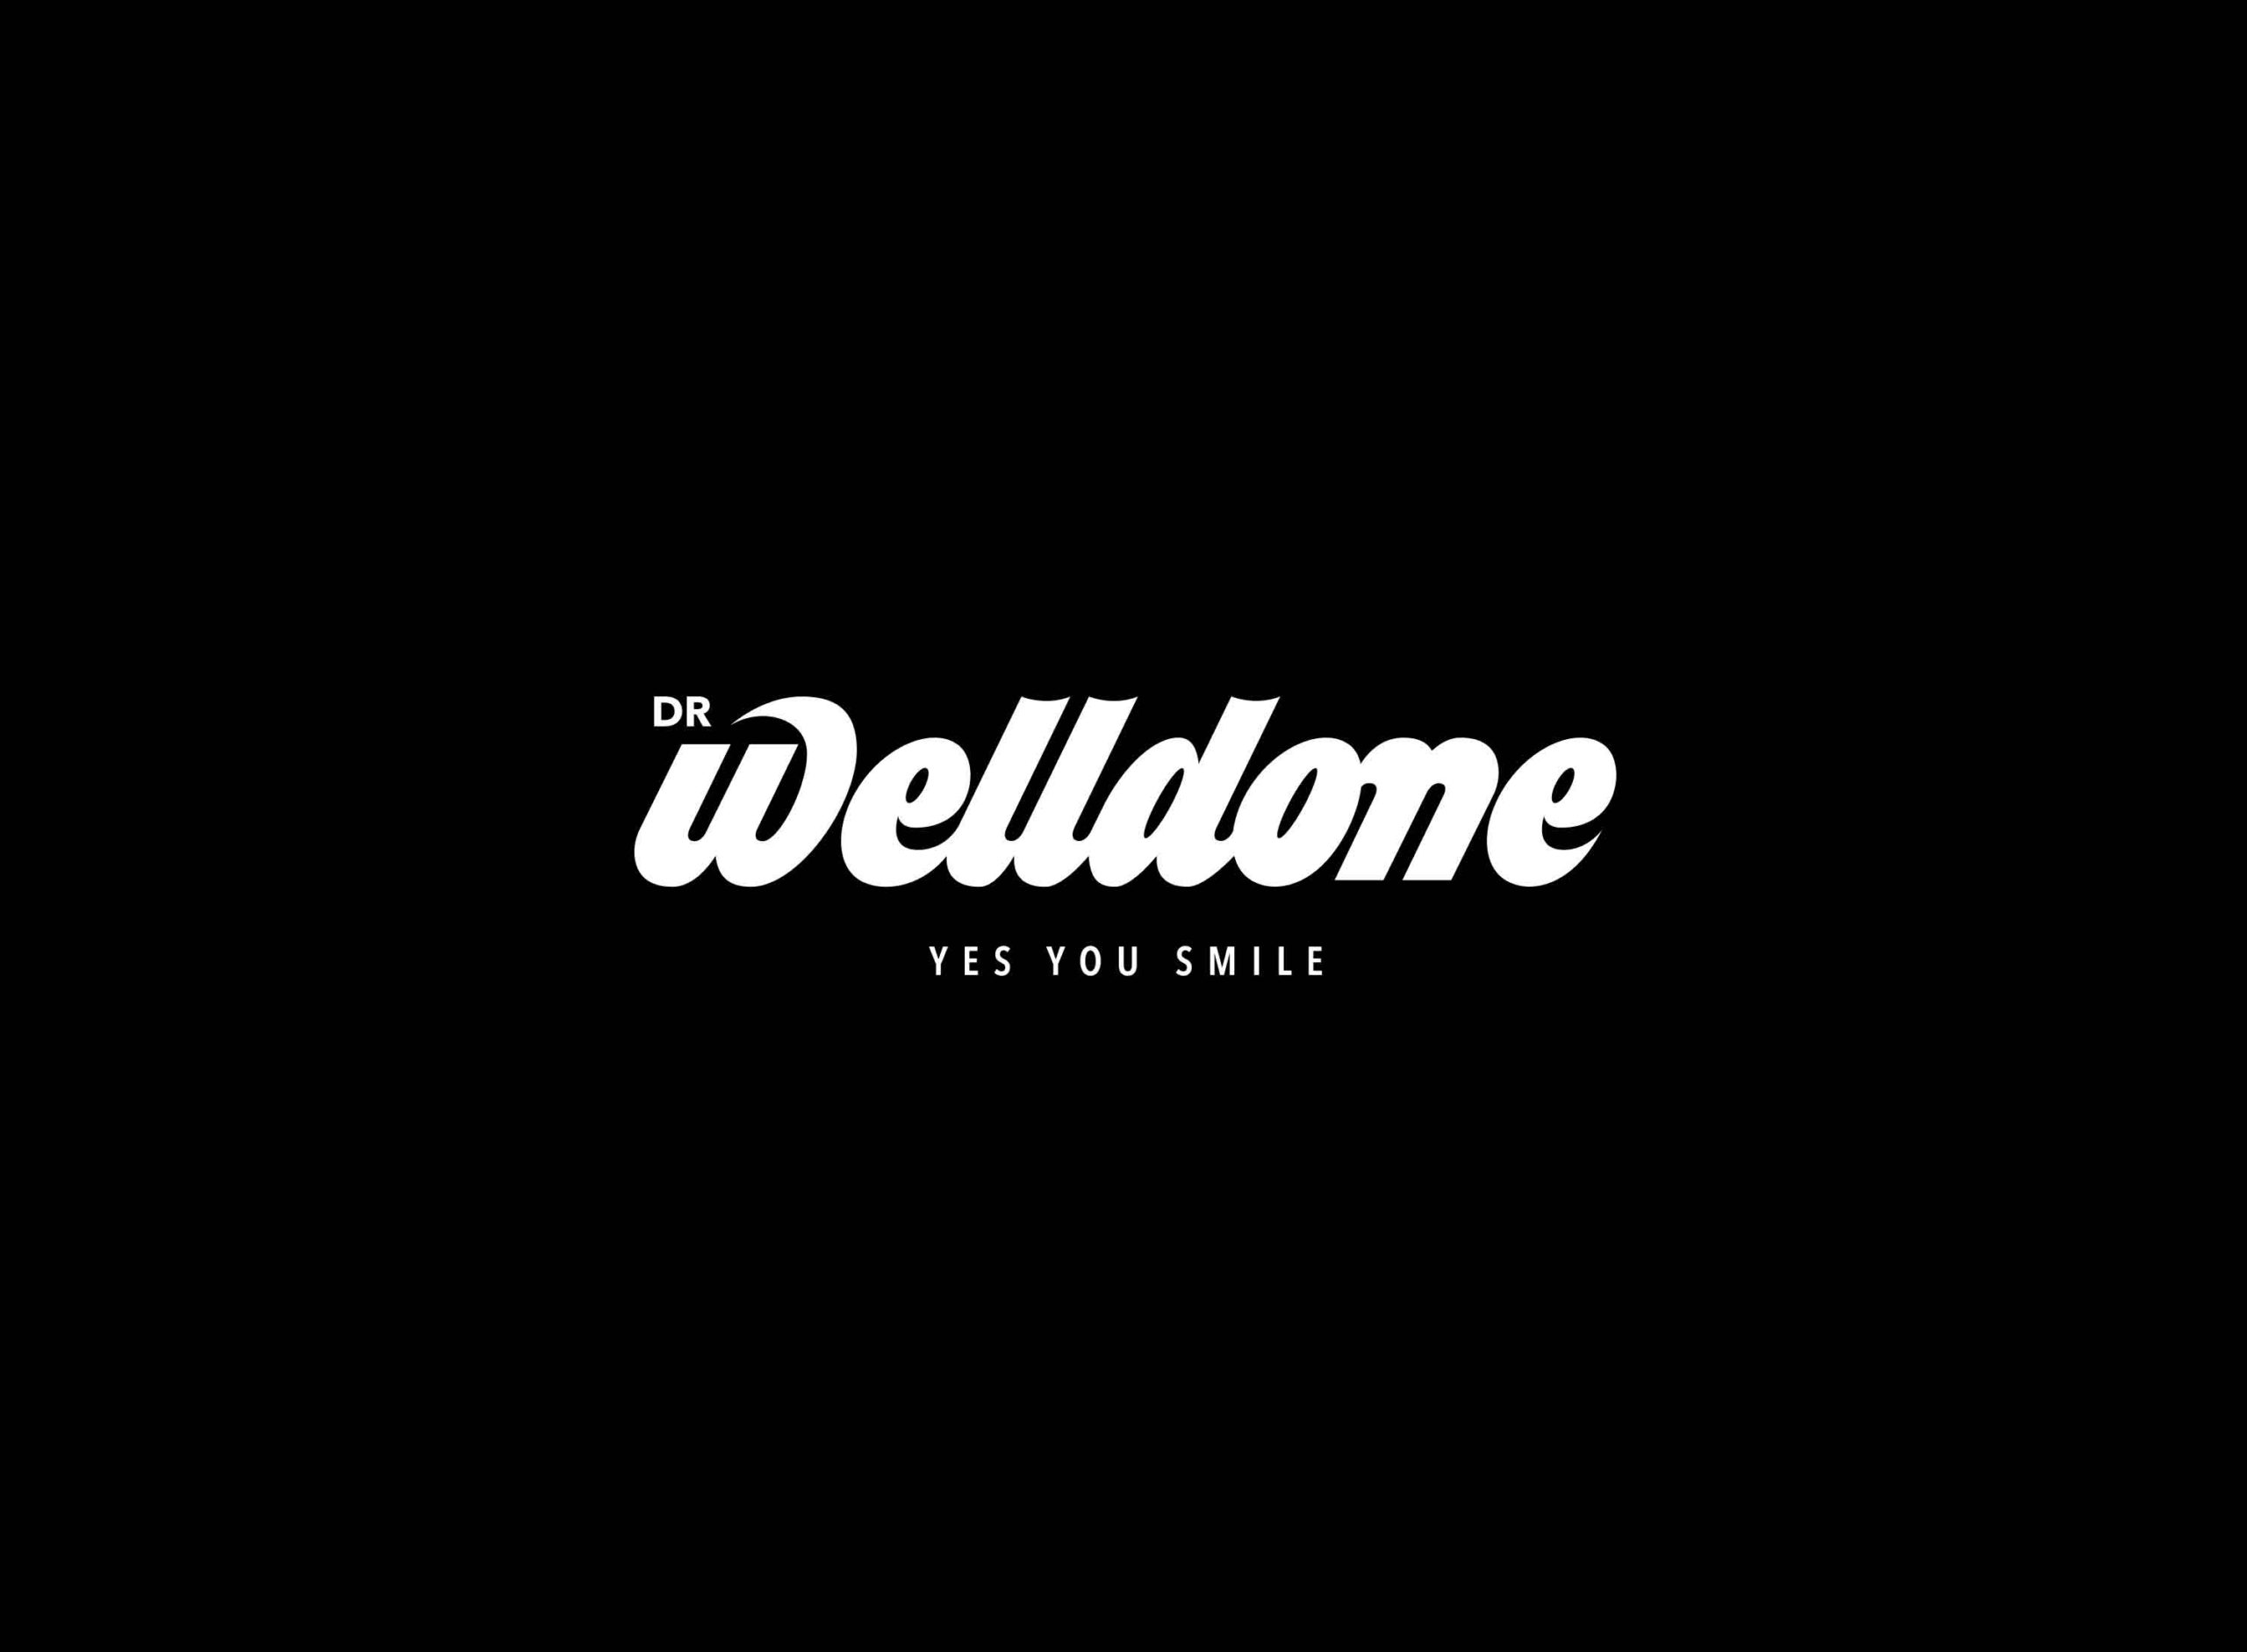 Logo Dr Welldone